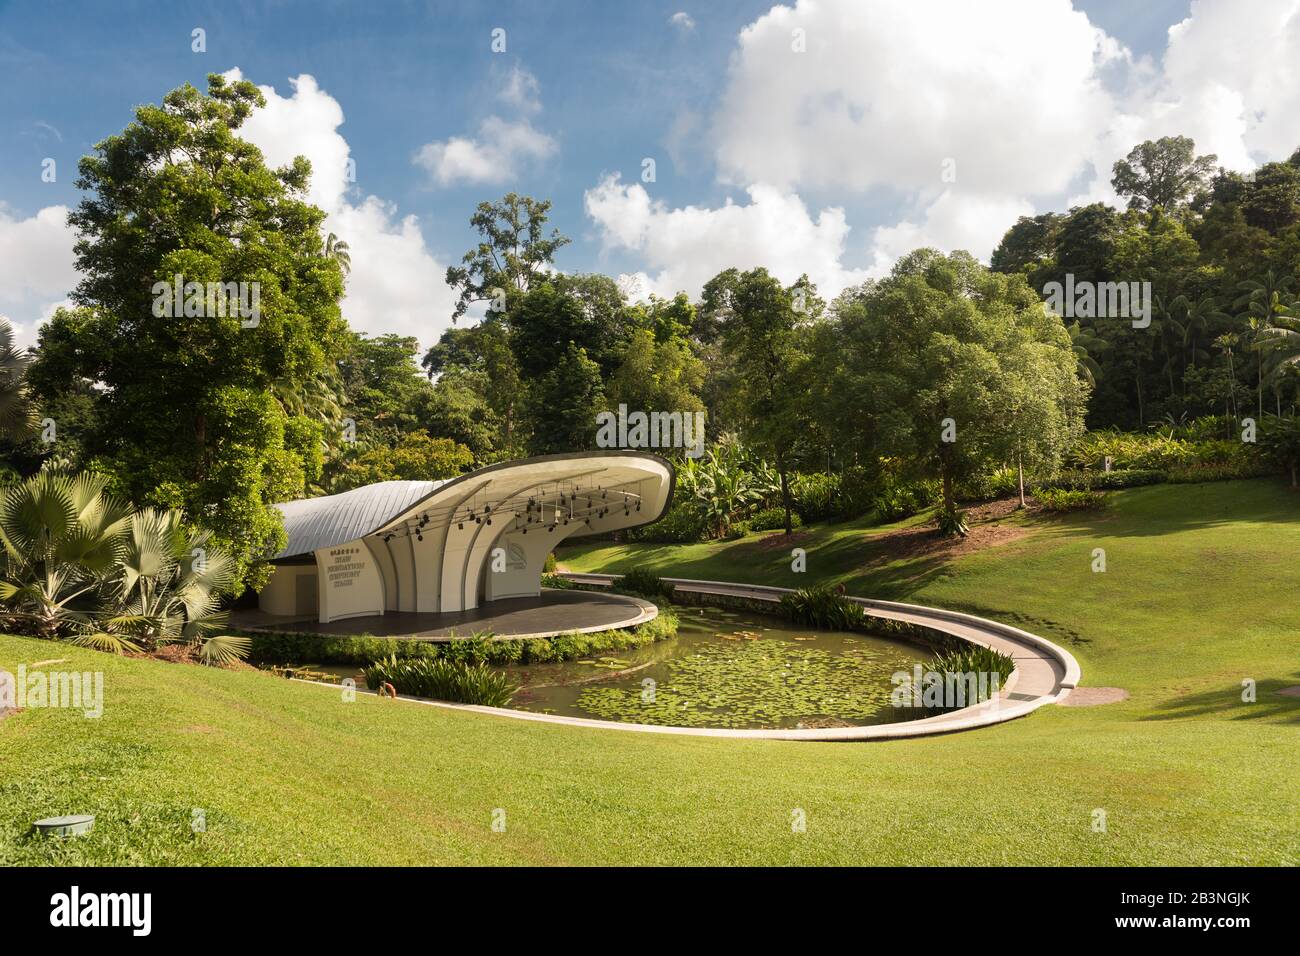 Singapore Botanic Gardens Foto Stock